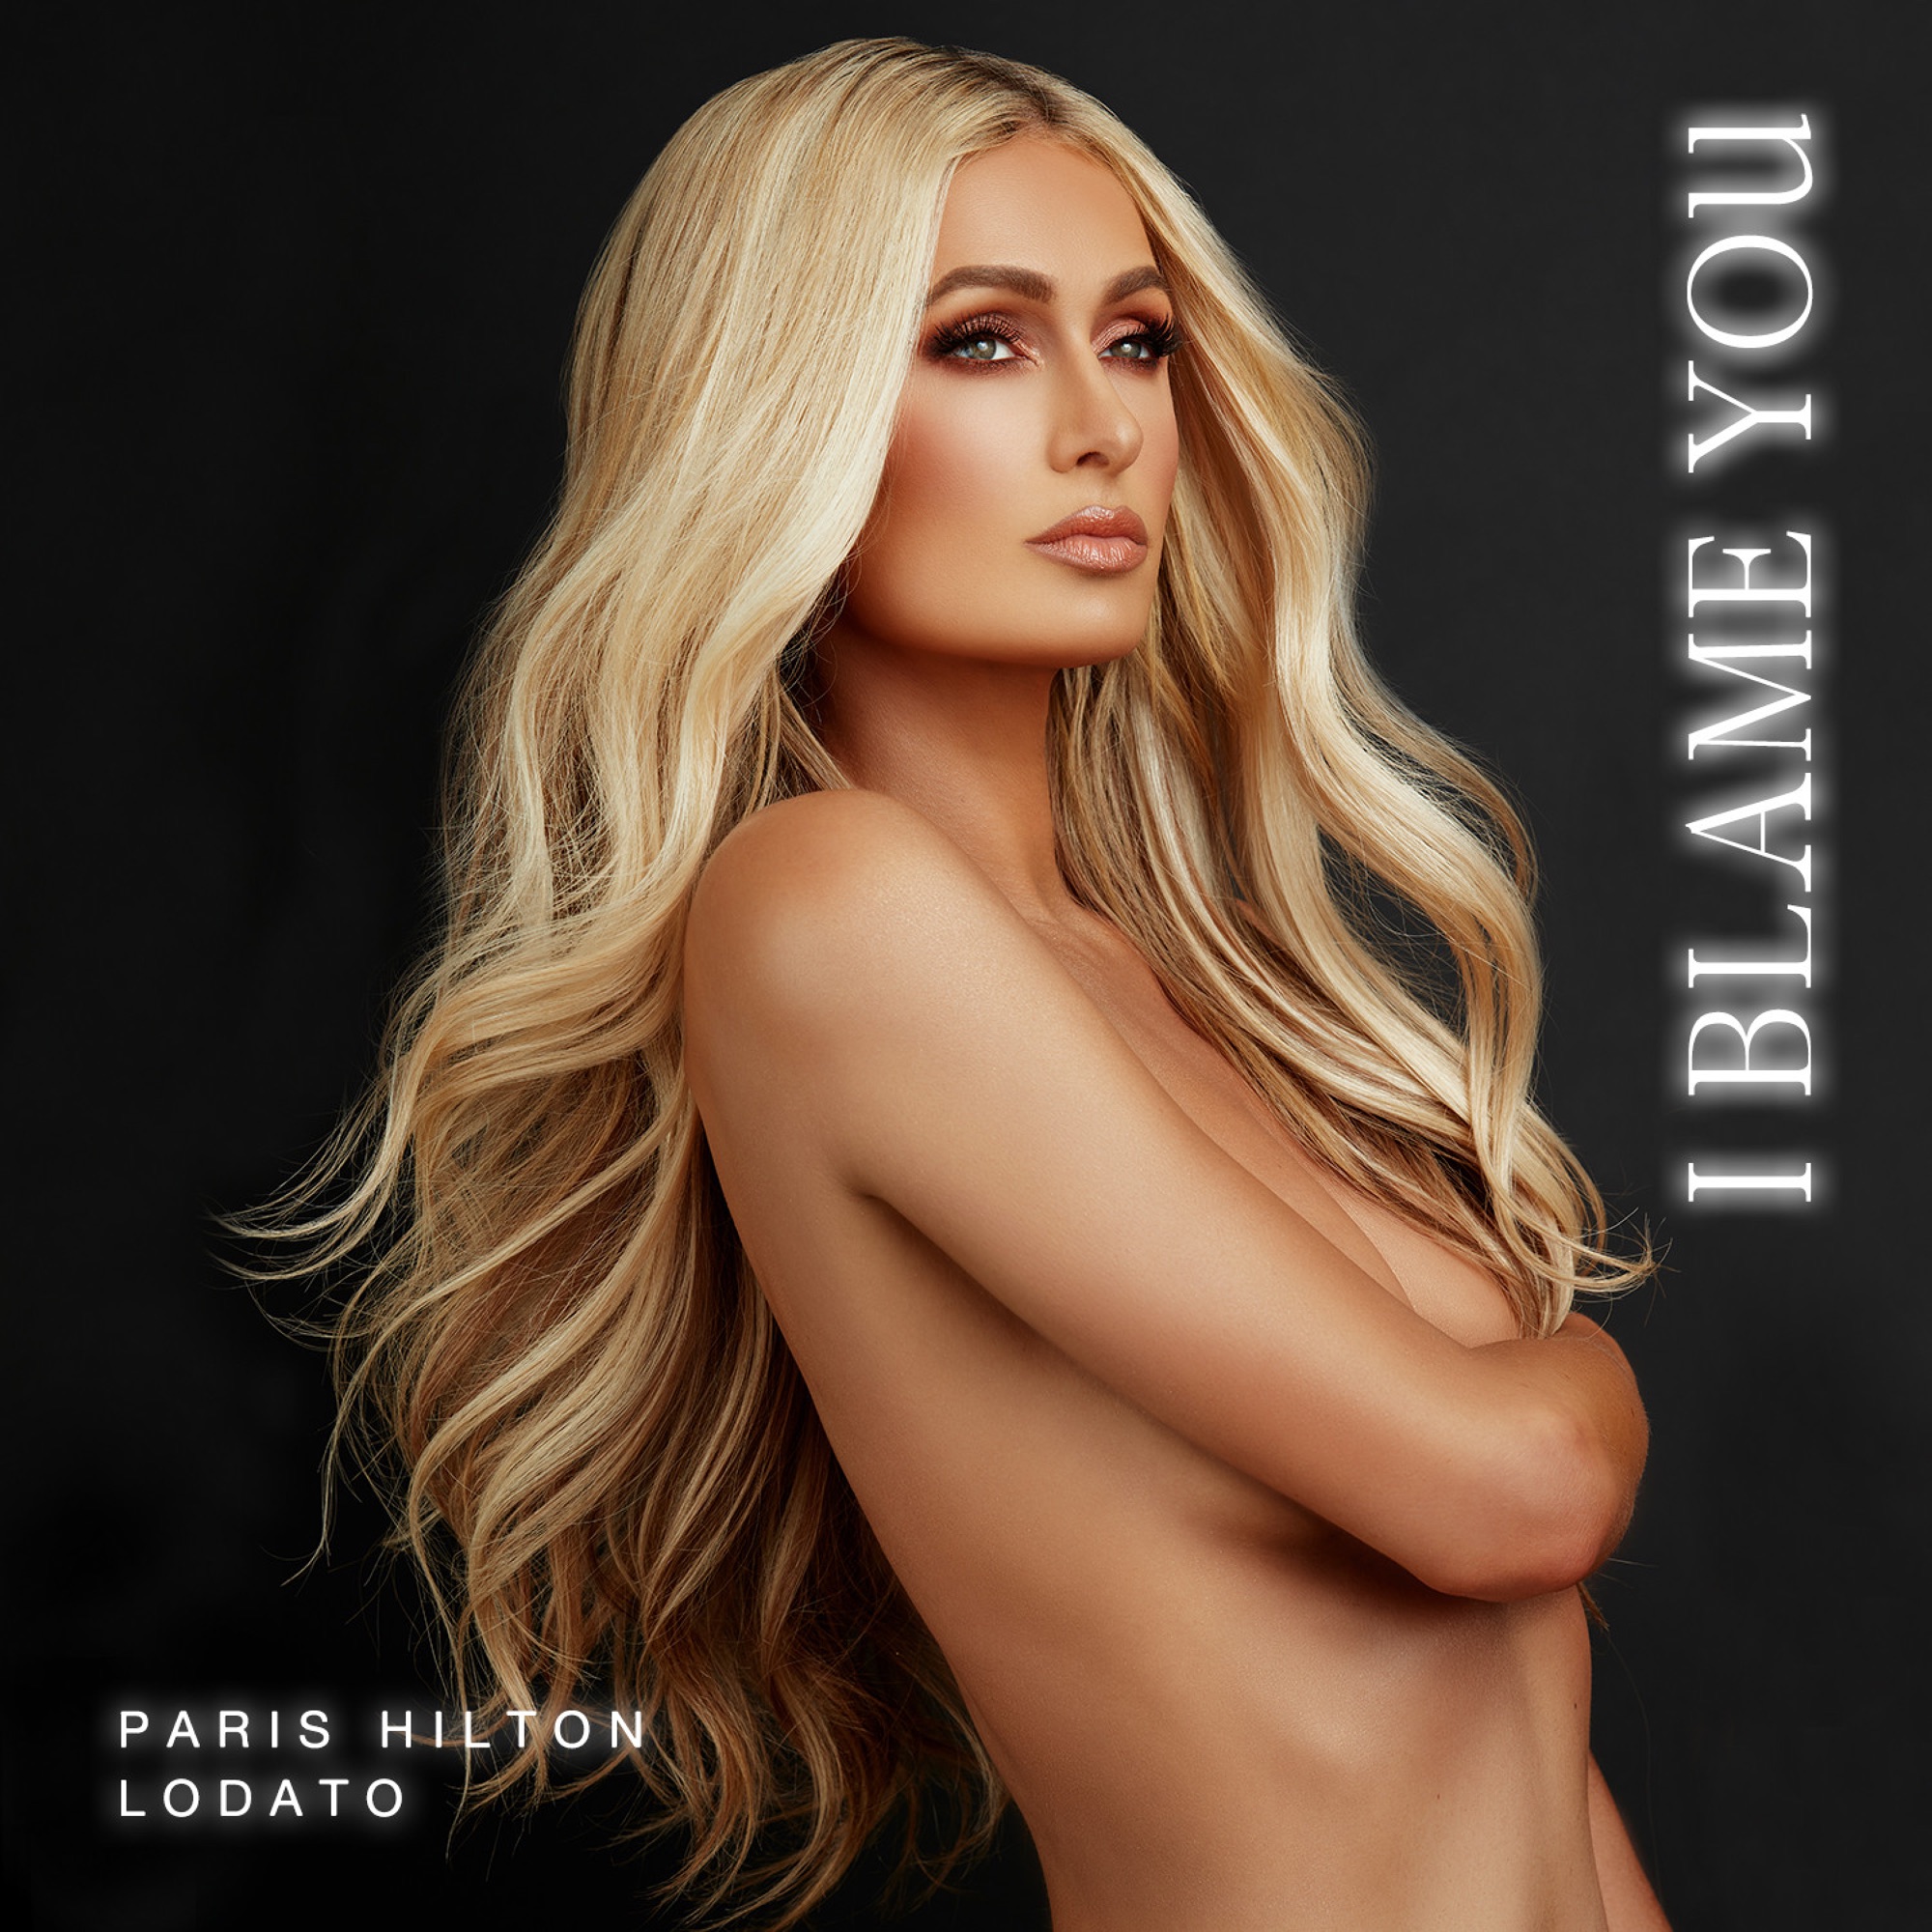 Paris Hilton & Lodato - I Blame You - Single